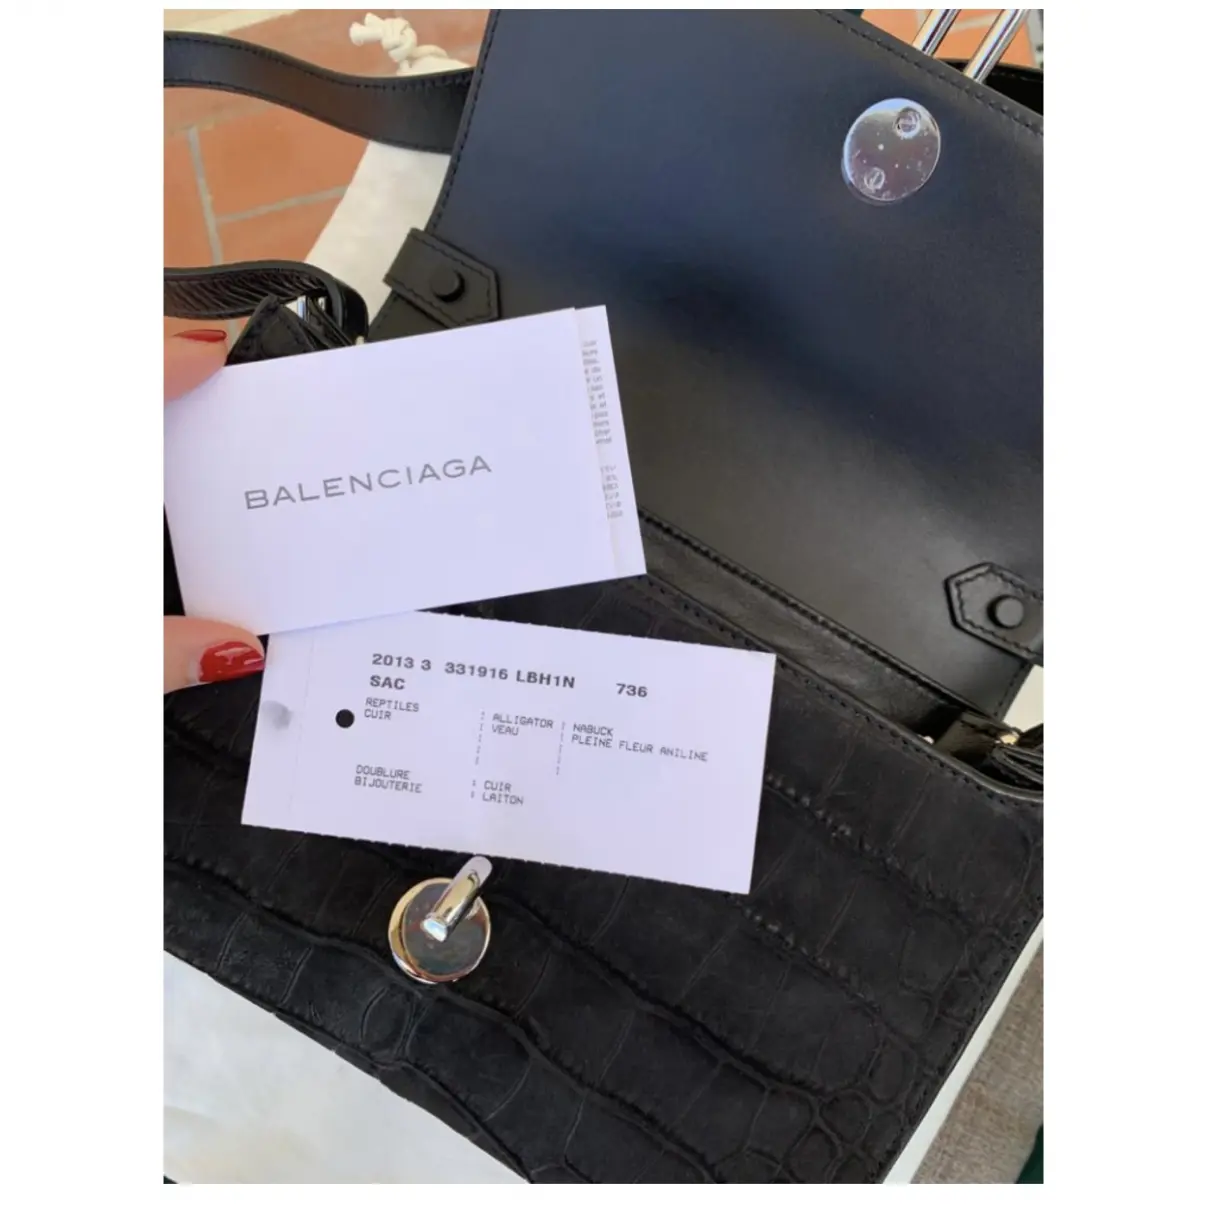 Buy Balenciaga Ghost leather handbag online